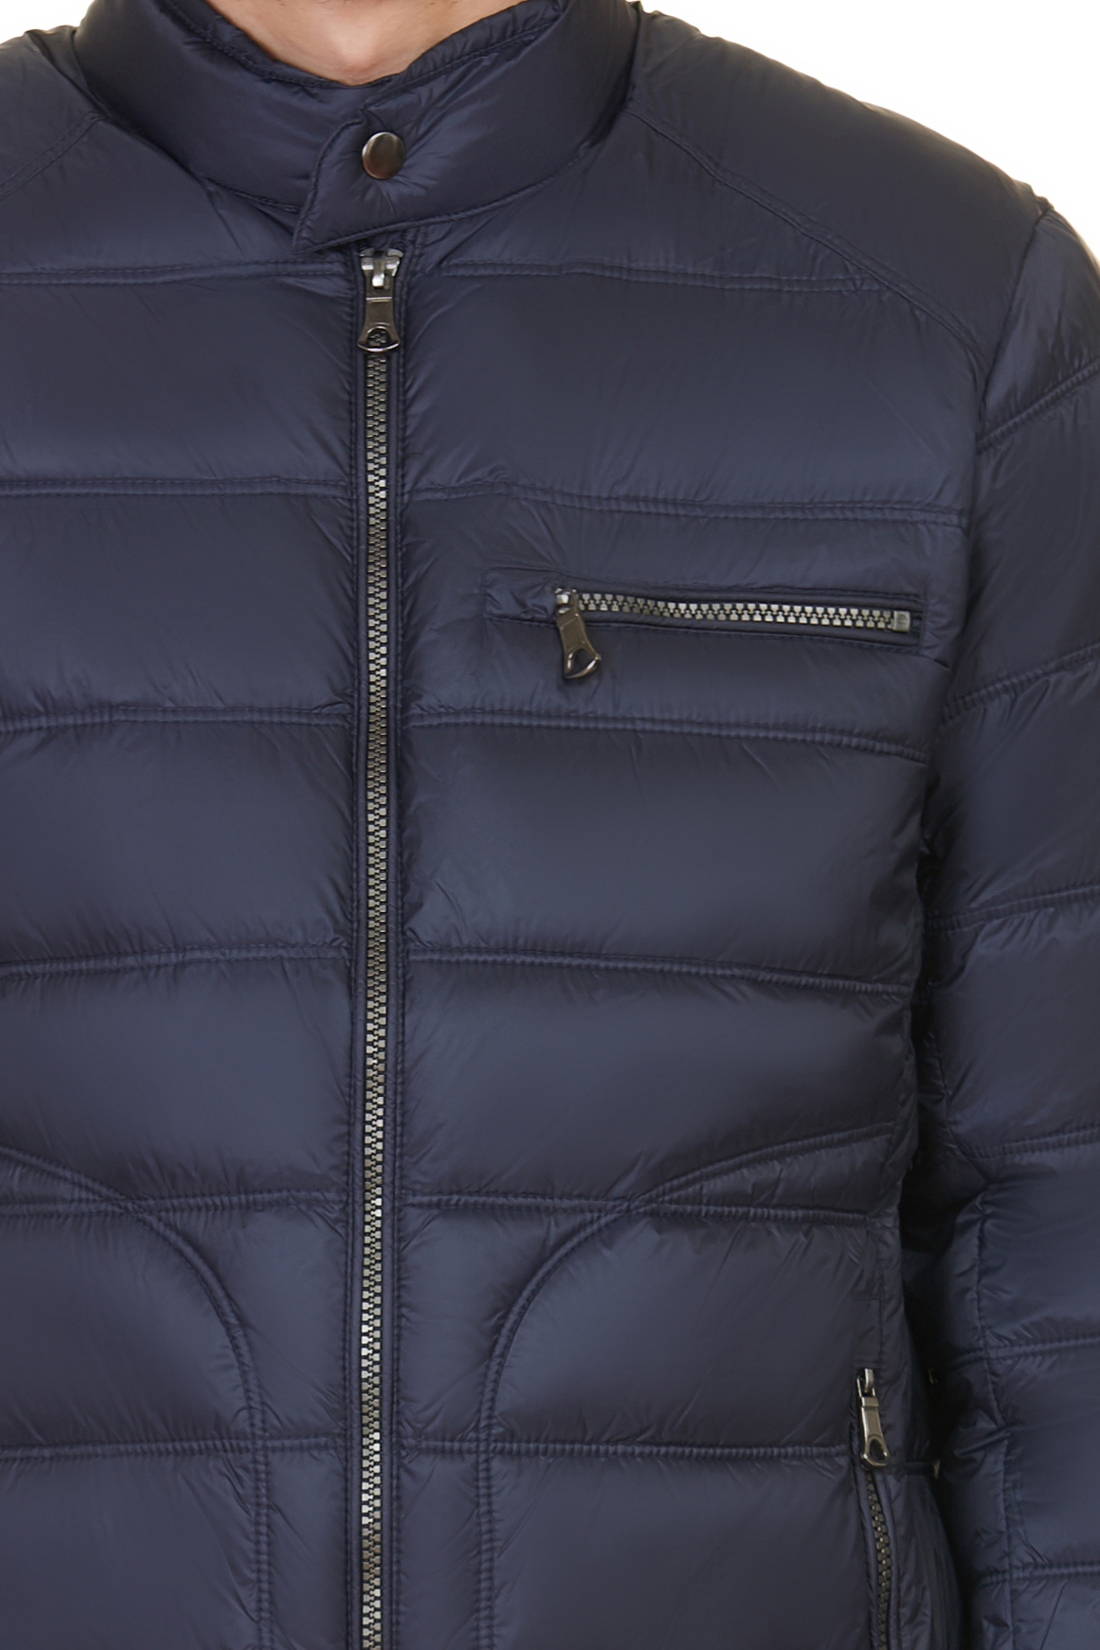 Куртка с прострочкой (арт. baon B537560), размер XL, цвет синий Куртка с прострочкой (арт. baon B537560) - фото 4